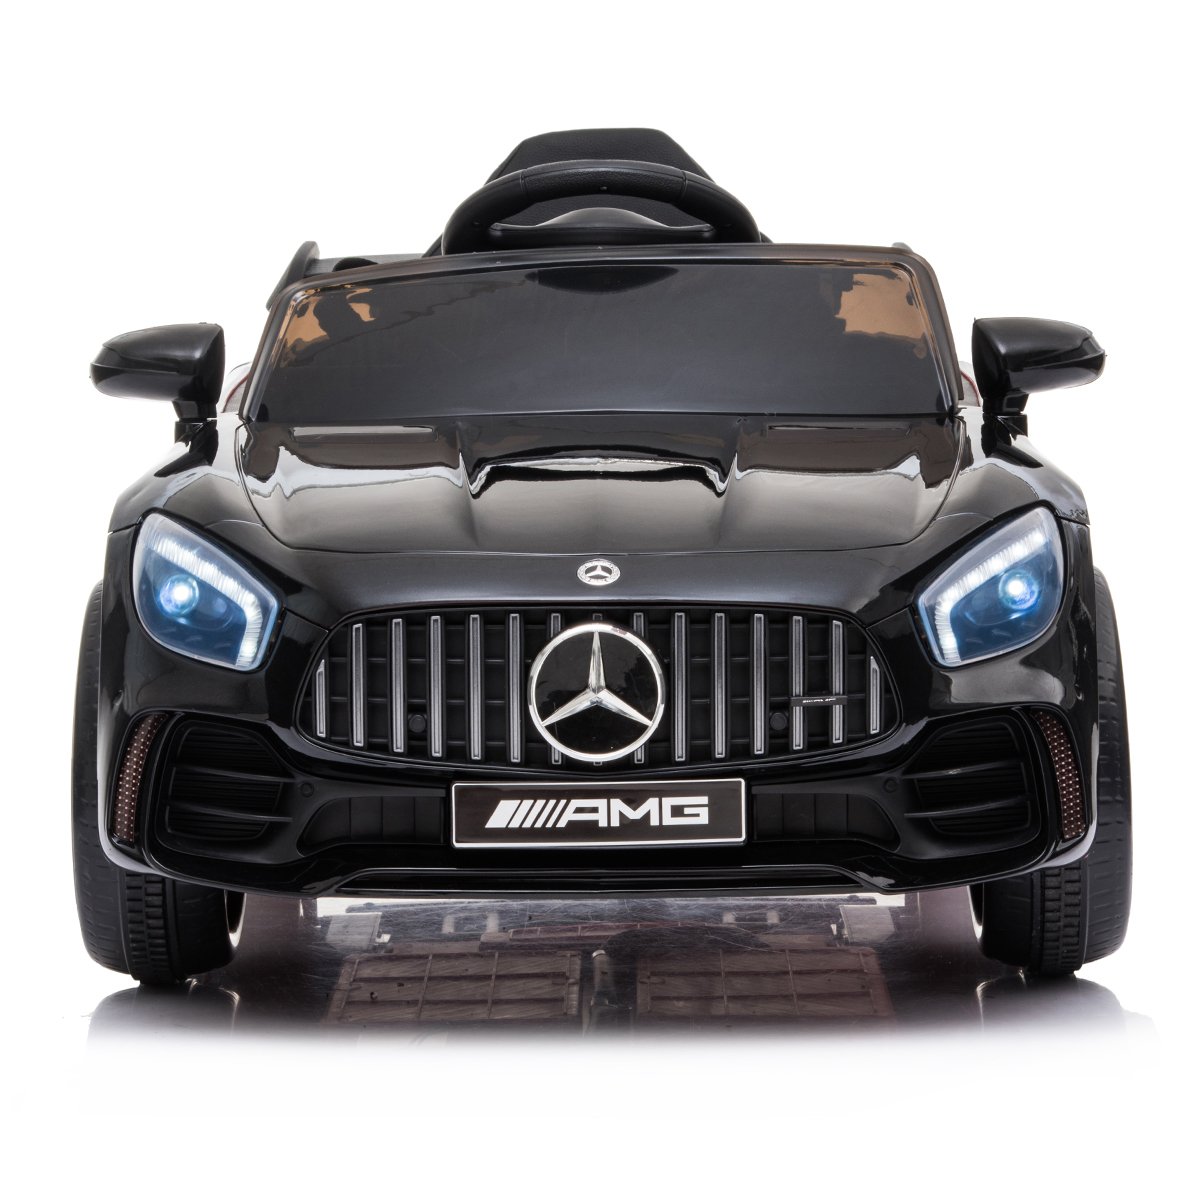 Mercedes Benz Licensed Kids Electric Ride On Car Remote Control Black